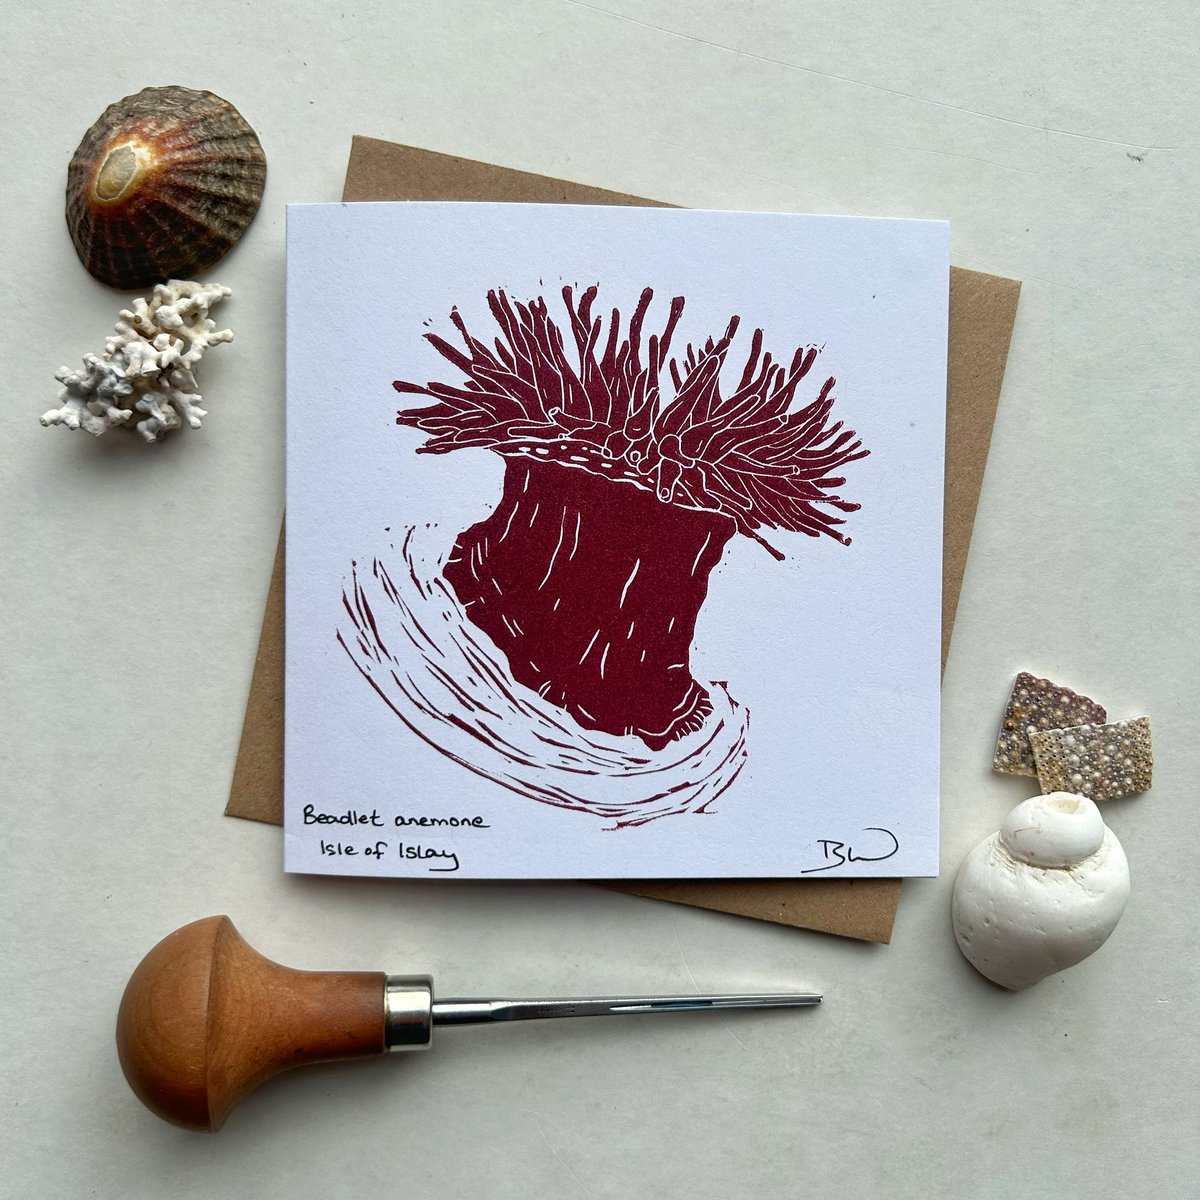 My rockpooling obsession is translating into my work! 

New handprinted linocut greeting cards - Beadlet anemone - #IsleofIslay 

#beadletanemone #rockpoolinguk #britishmarinelife #rockpooling #handprinted #handmadeinscotland